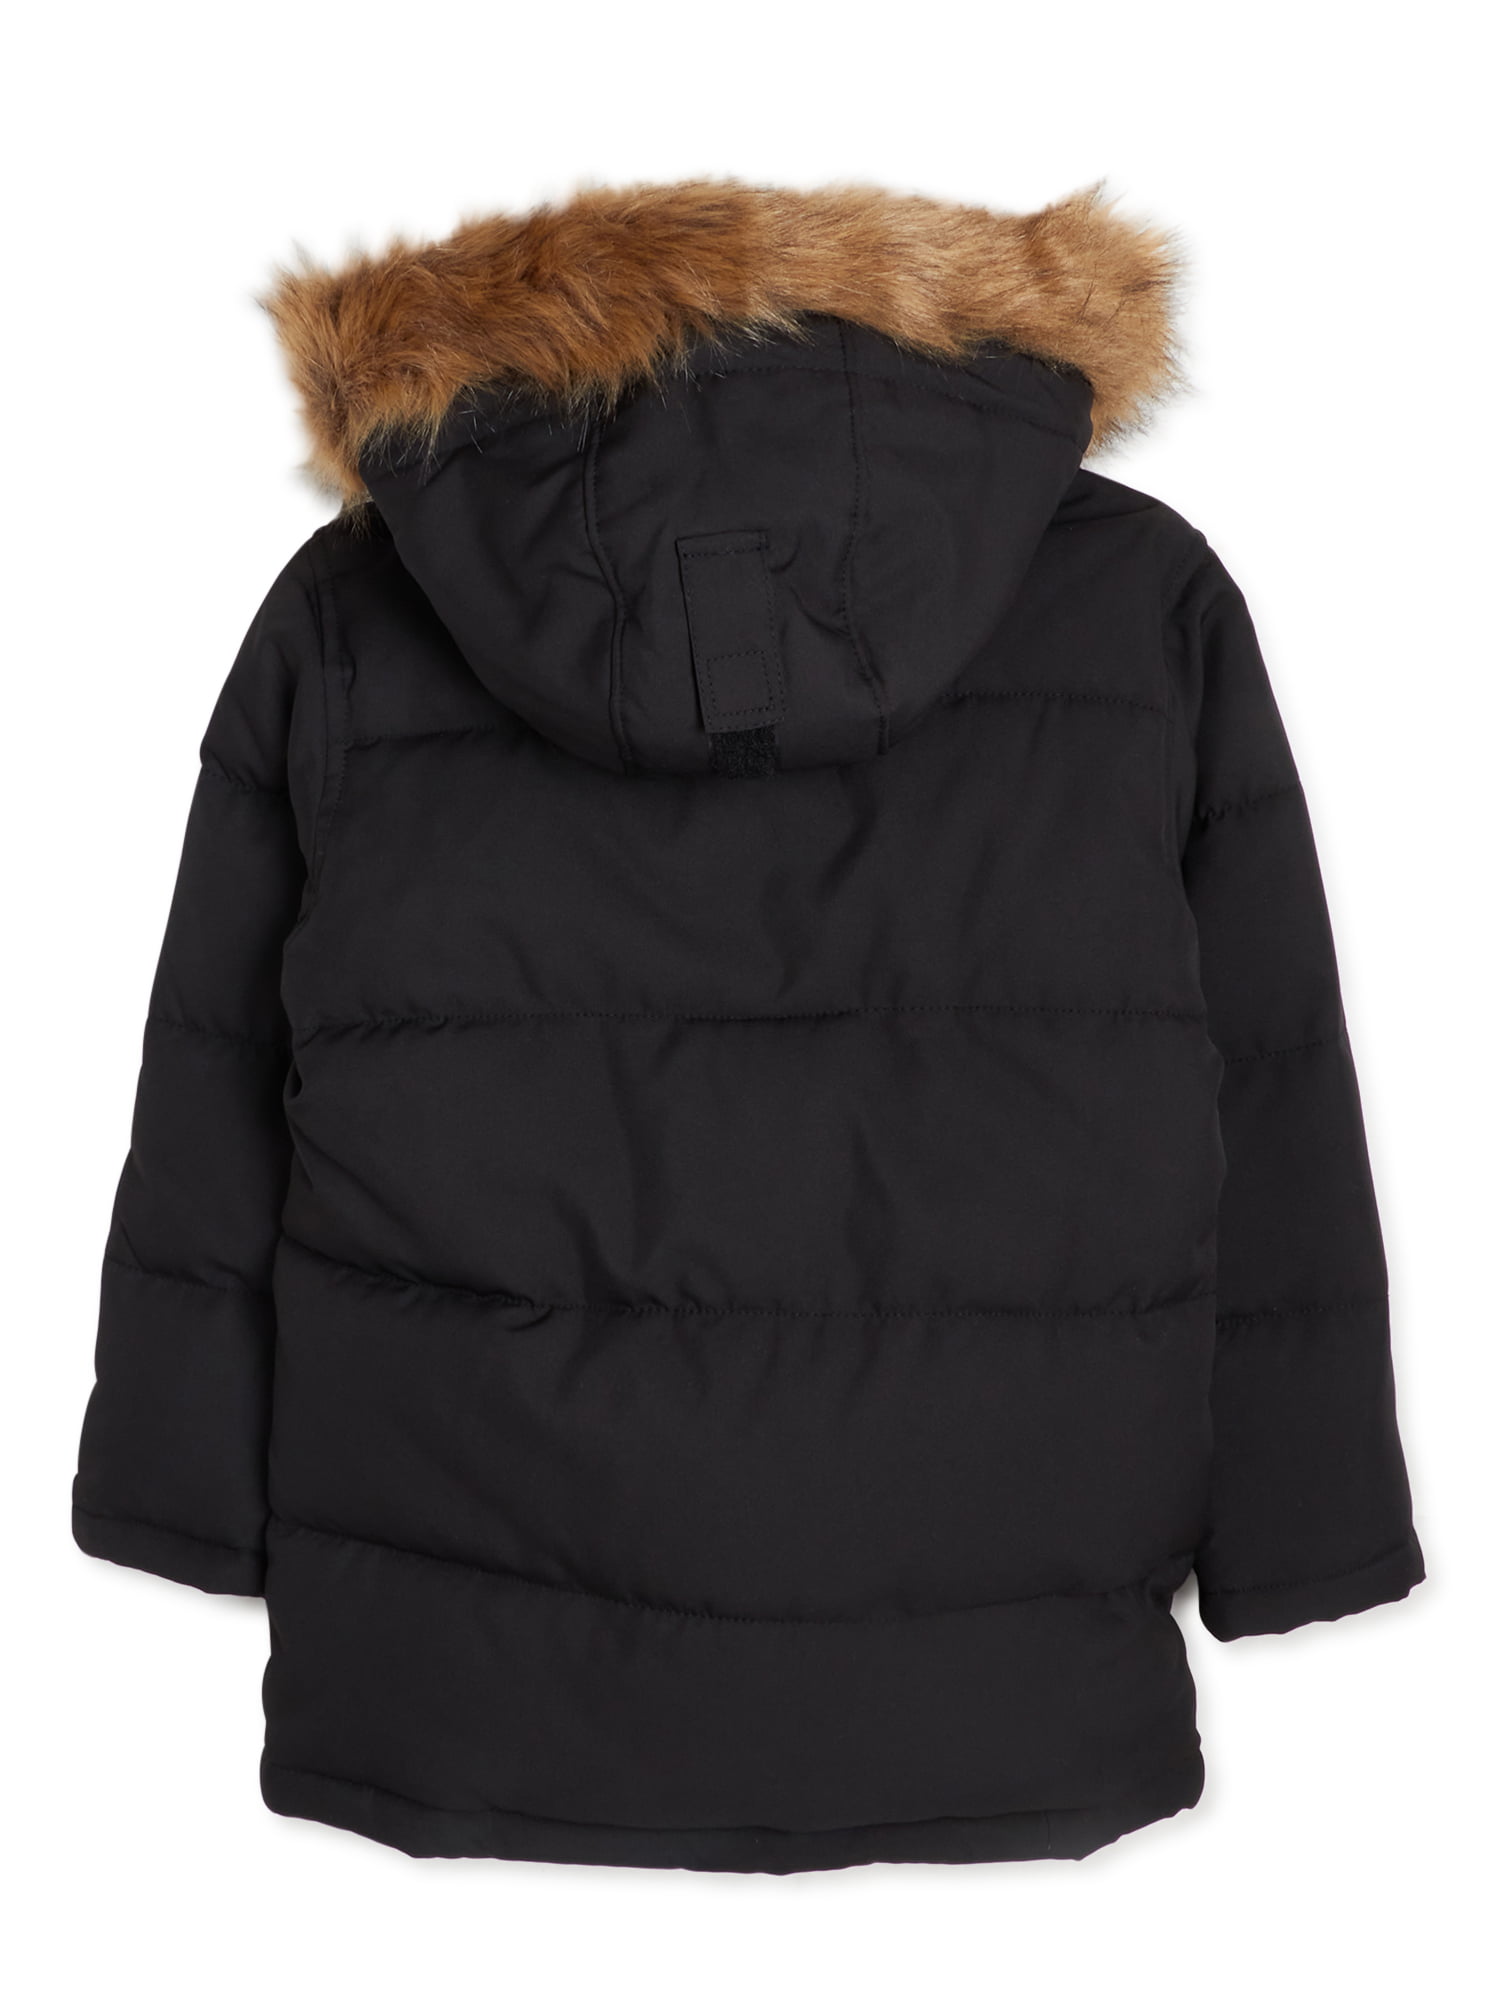 Swiss Tech Boys Winter Puffer Parka Jacket, Sizes 4-18